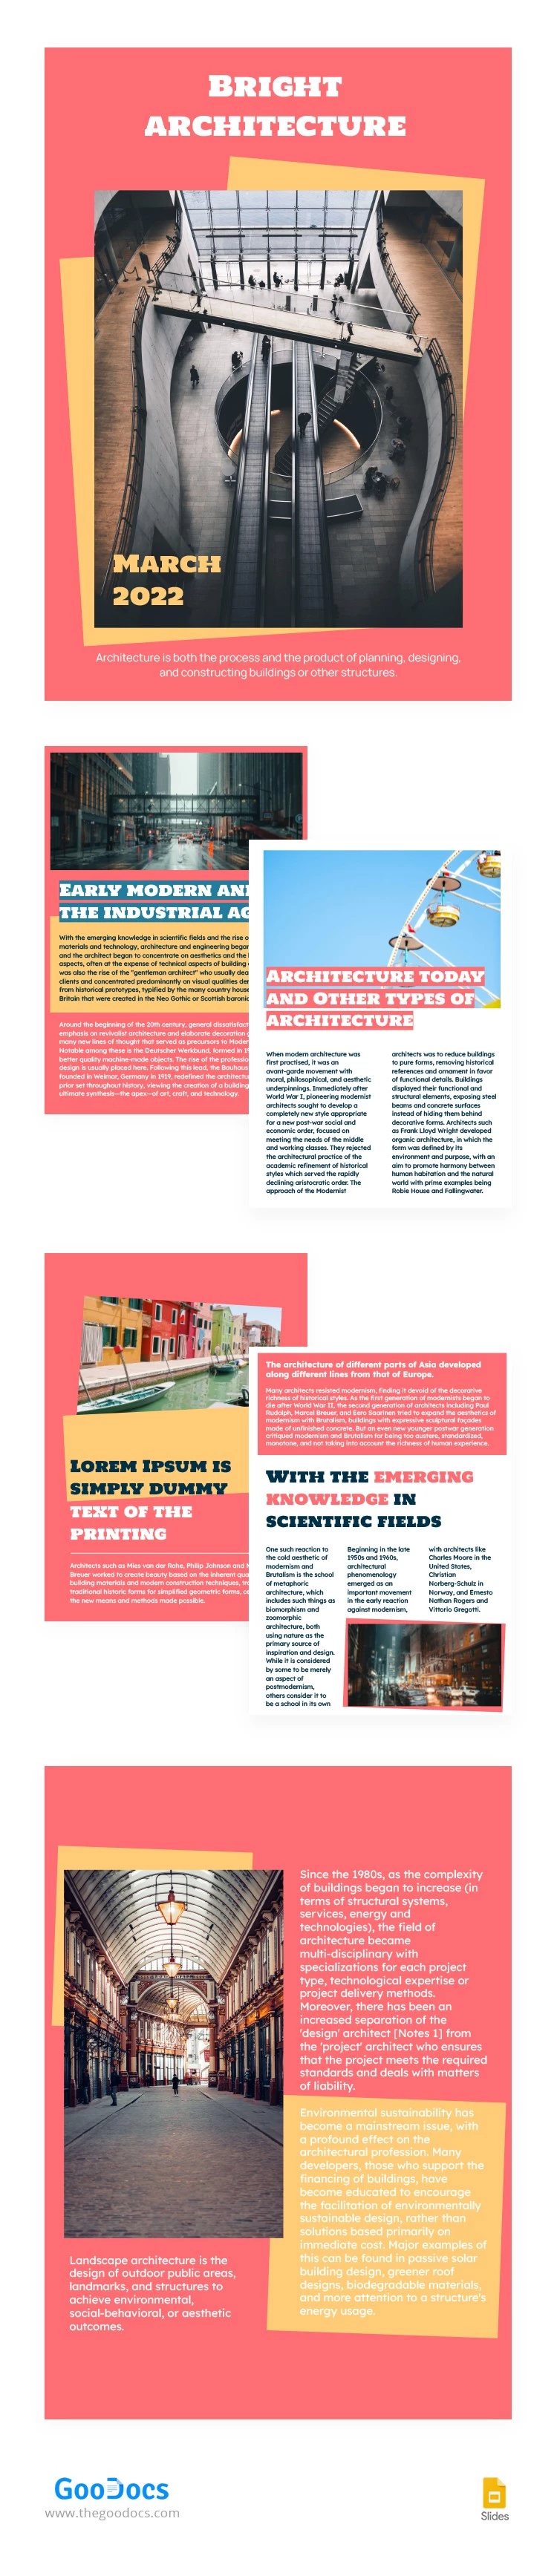 Bright Architecture Magazine - free Google Docs Template - 10063741